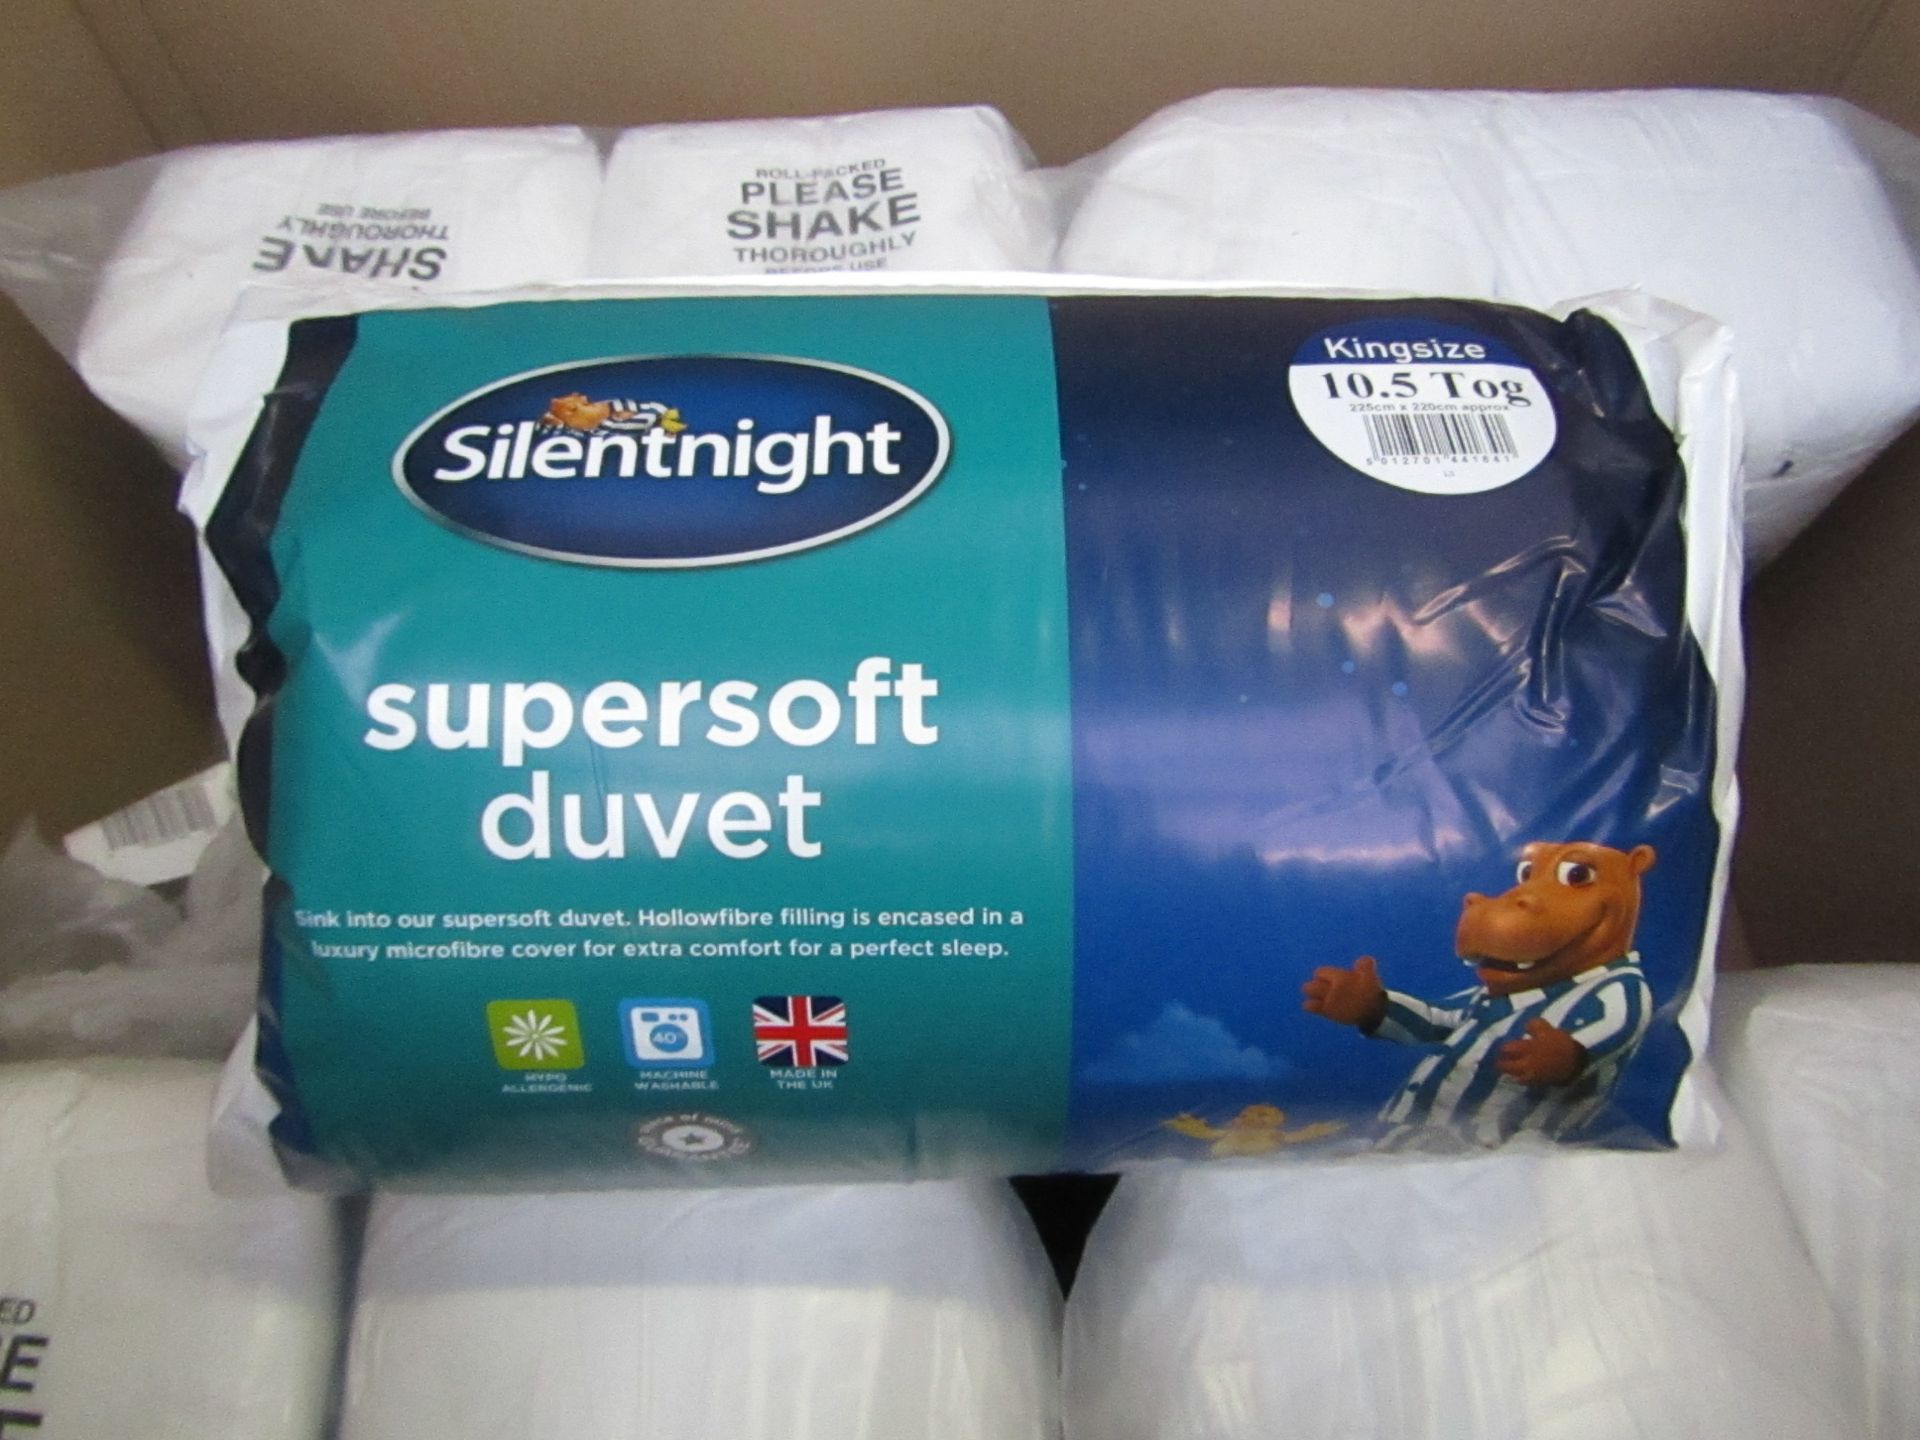 Silentnight Supersoft duvet, kingsize, 10.5 Tog, brand new and packaged. RRP £24.99